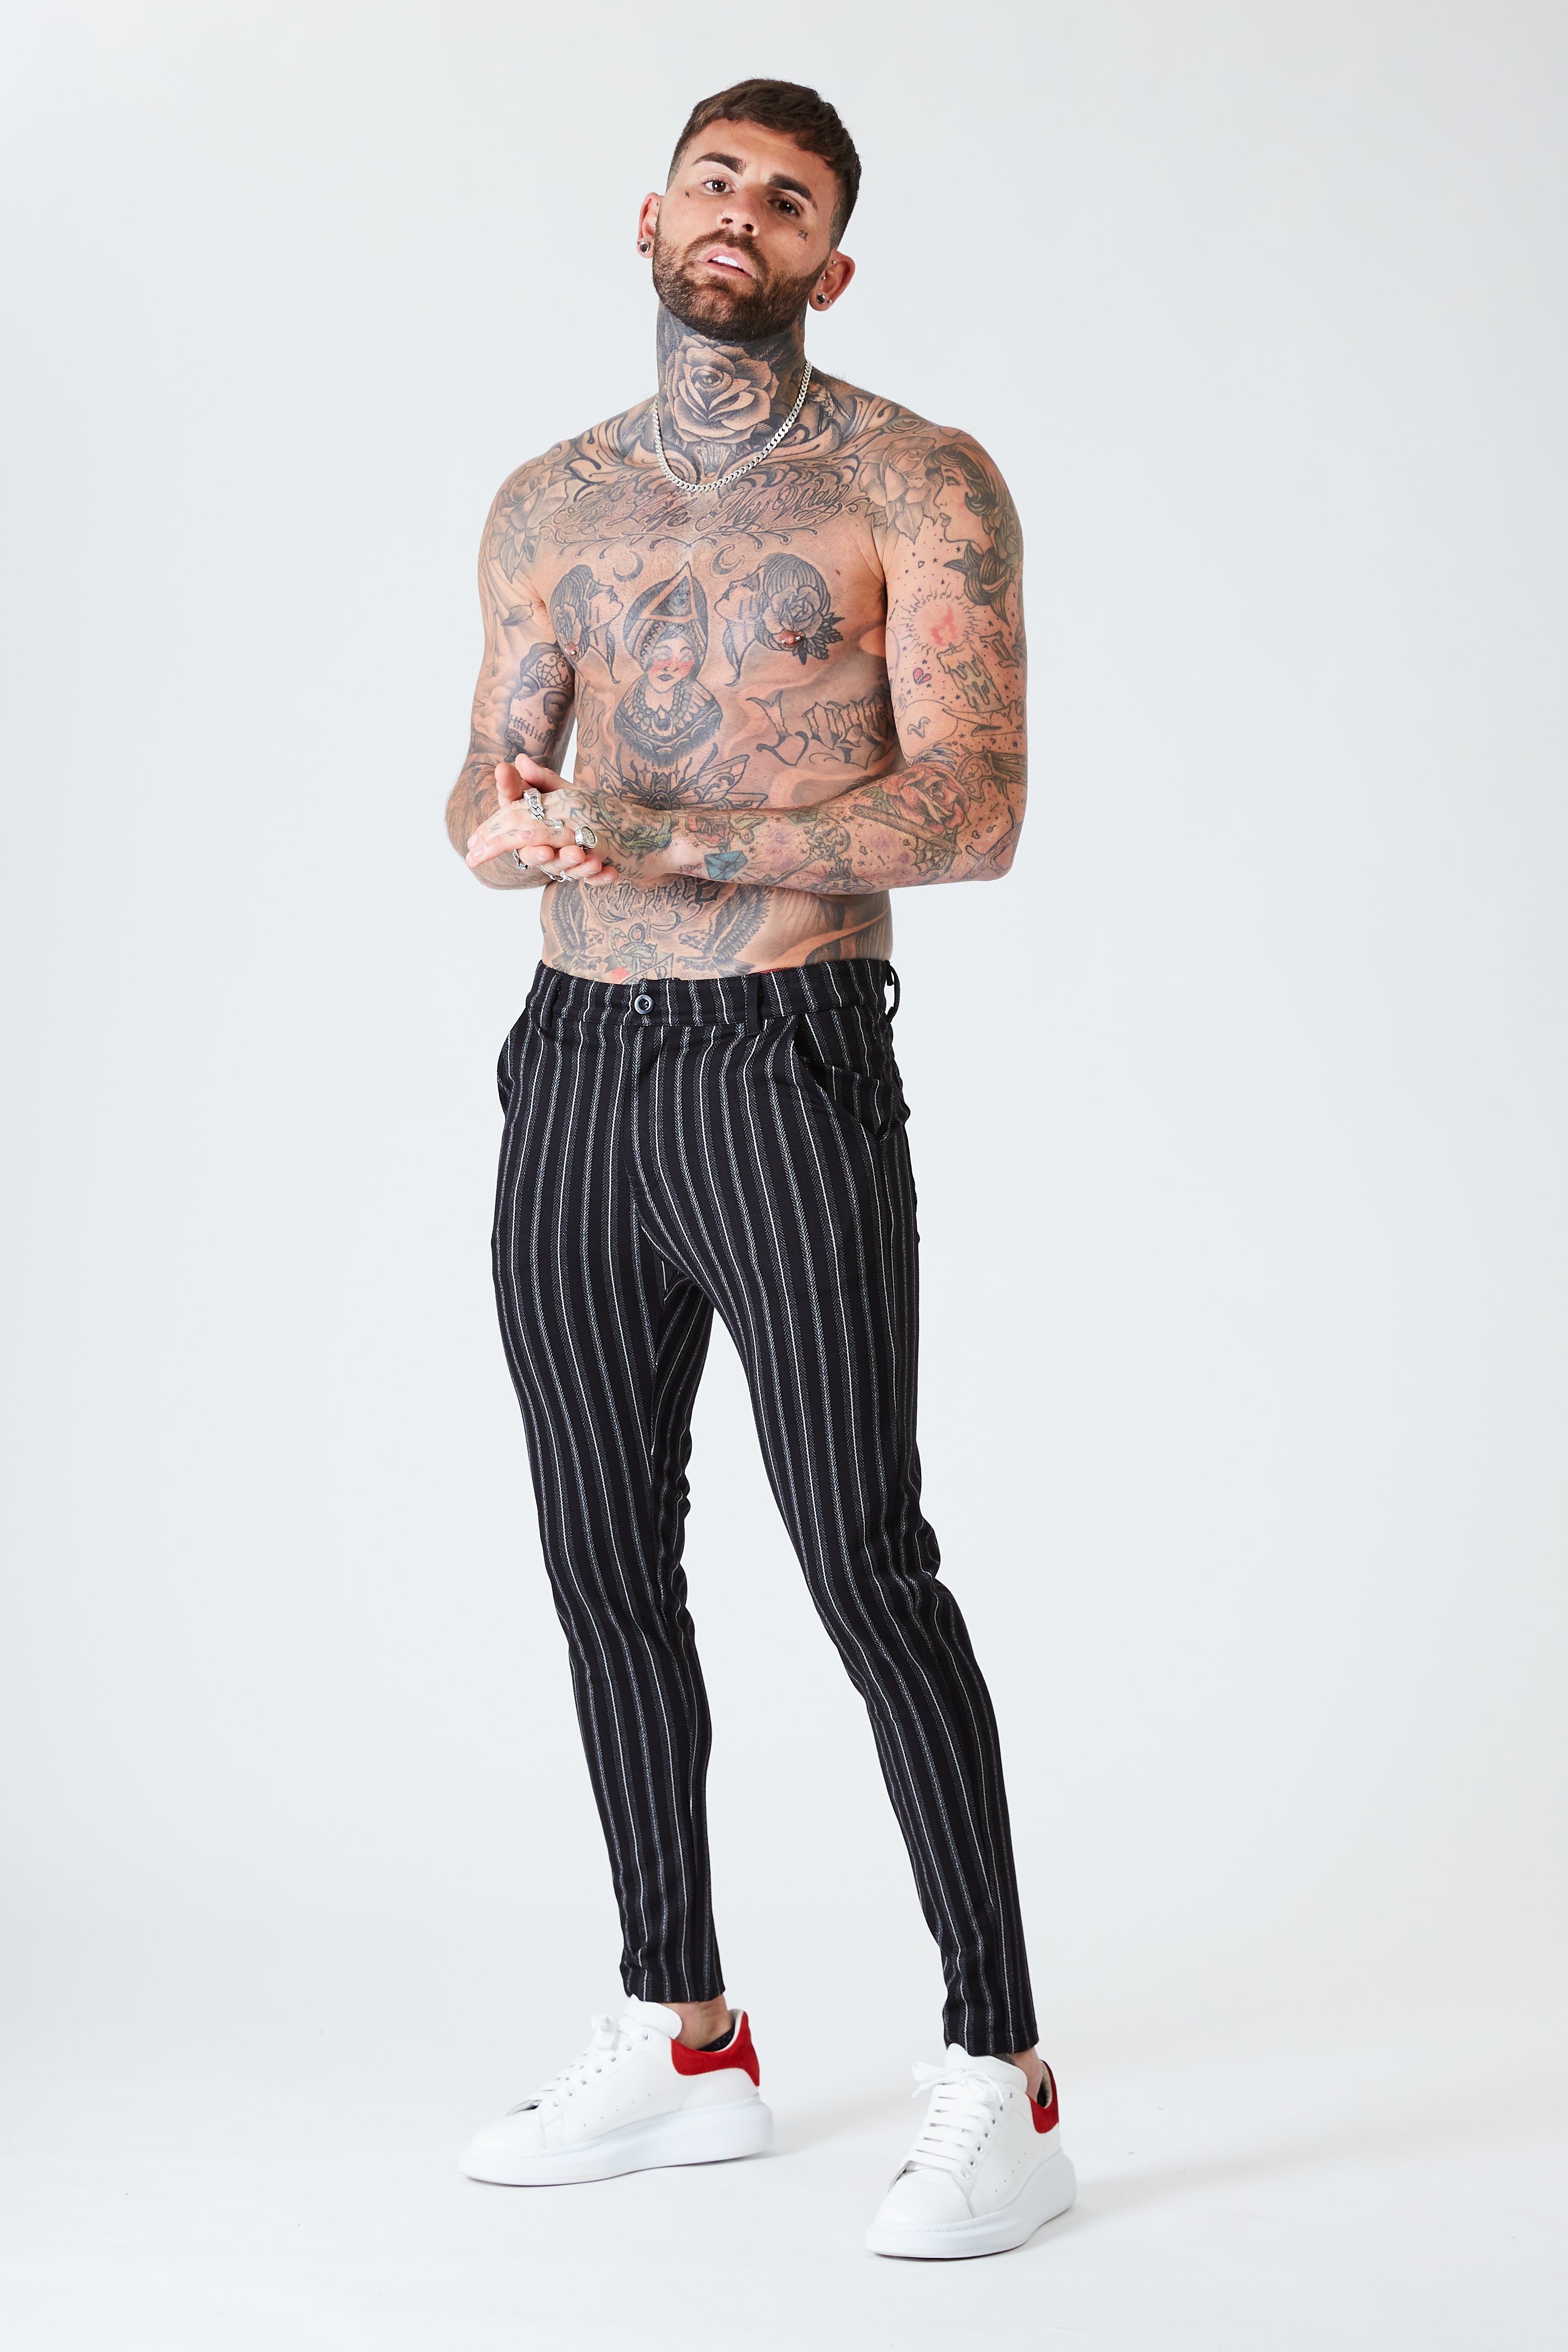 Luxe Skinny Pin Stripe Trousers - Black - SVPPLY. STUDIOS 